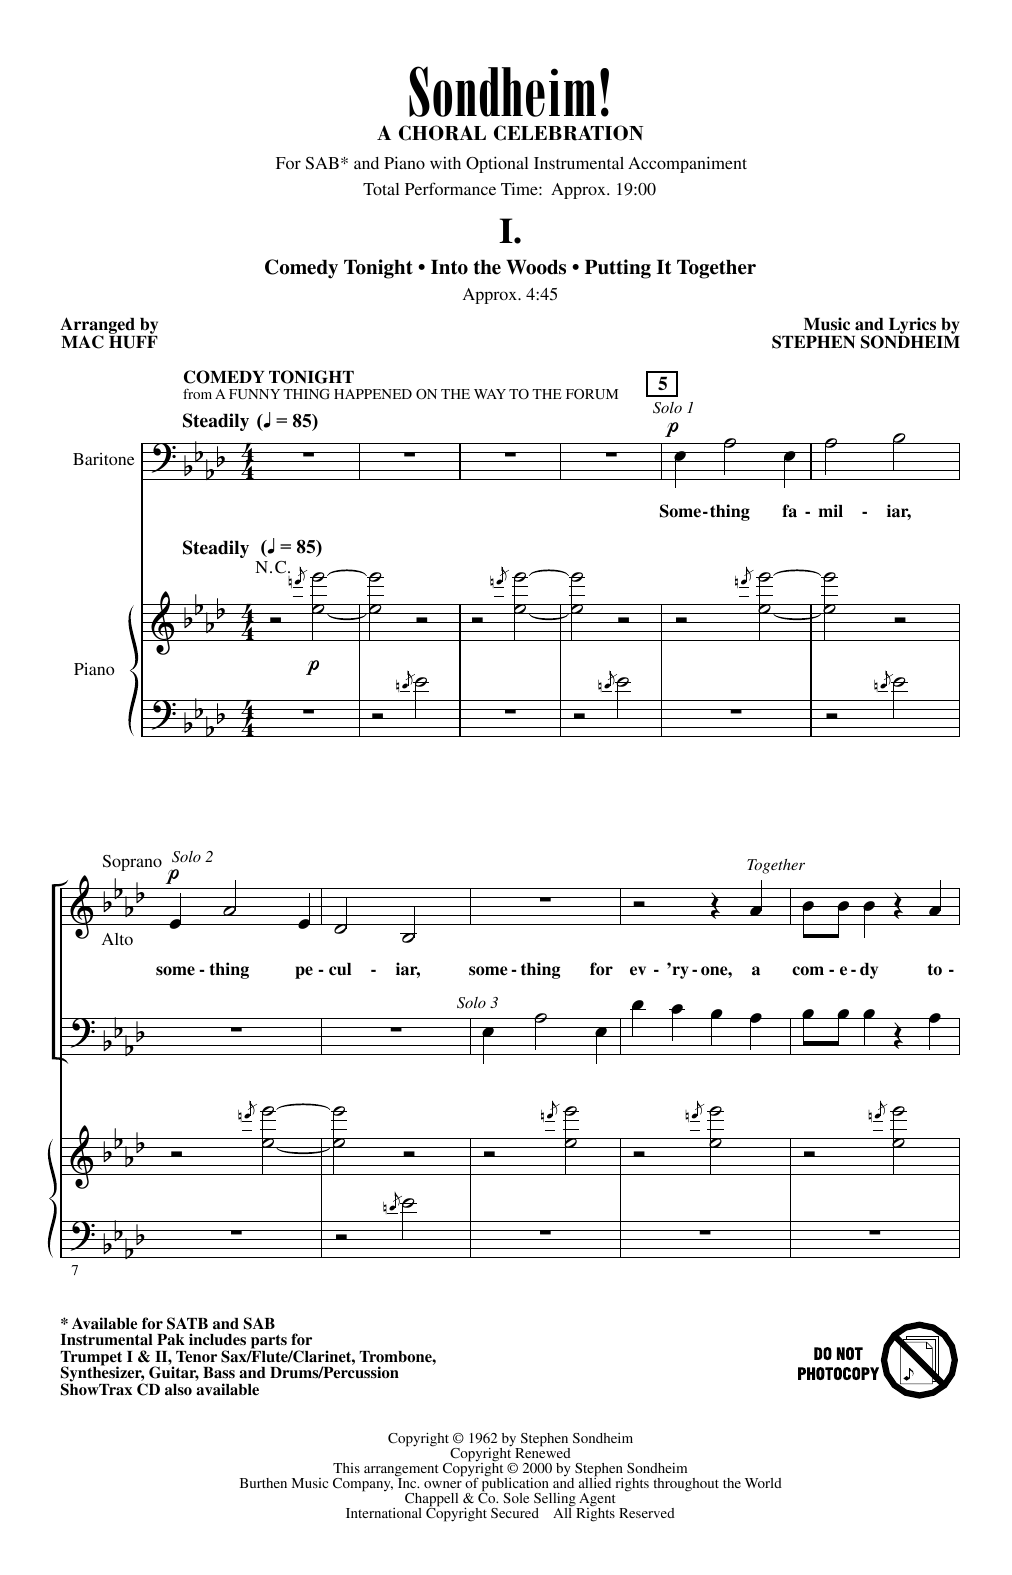 Download Stephen Sondheim Sondheim! A Choral Celebration (Medley) (arr. Mac Huff) Sheet Music and learn how to play SATB Choir PDF digital score in minutes